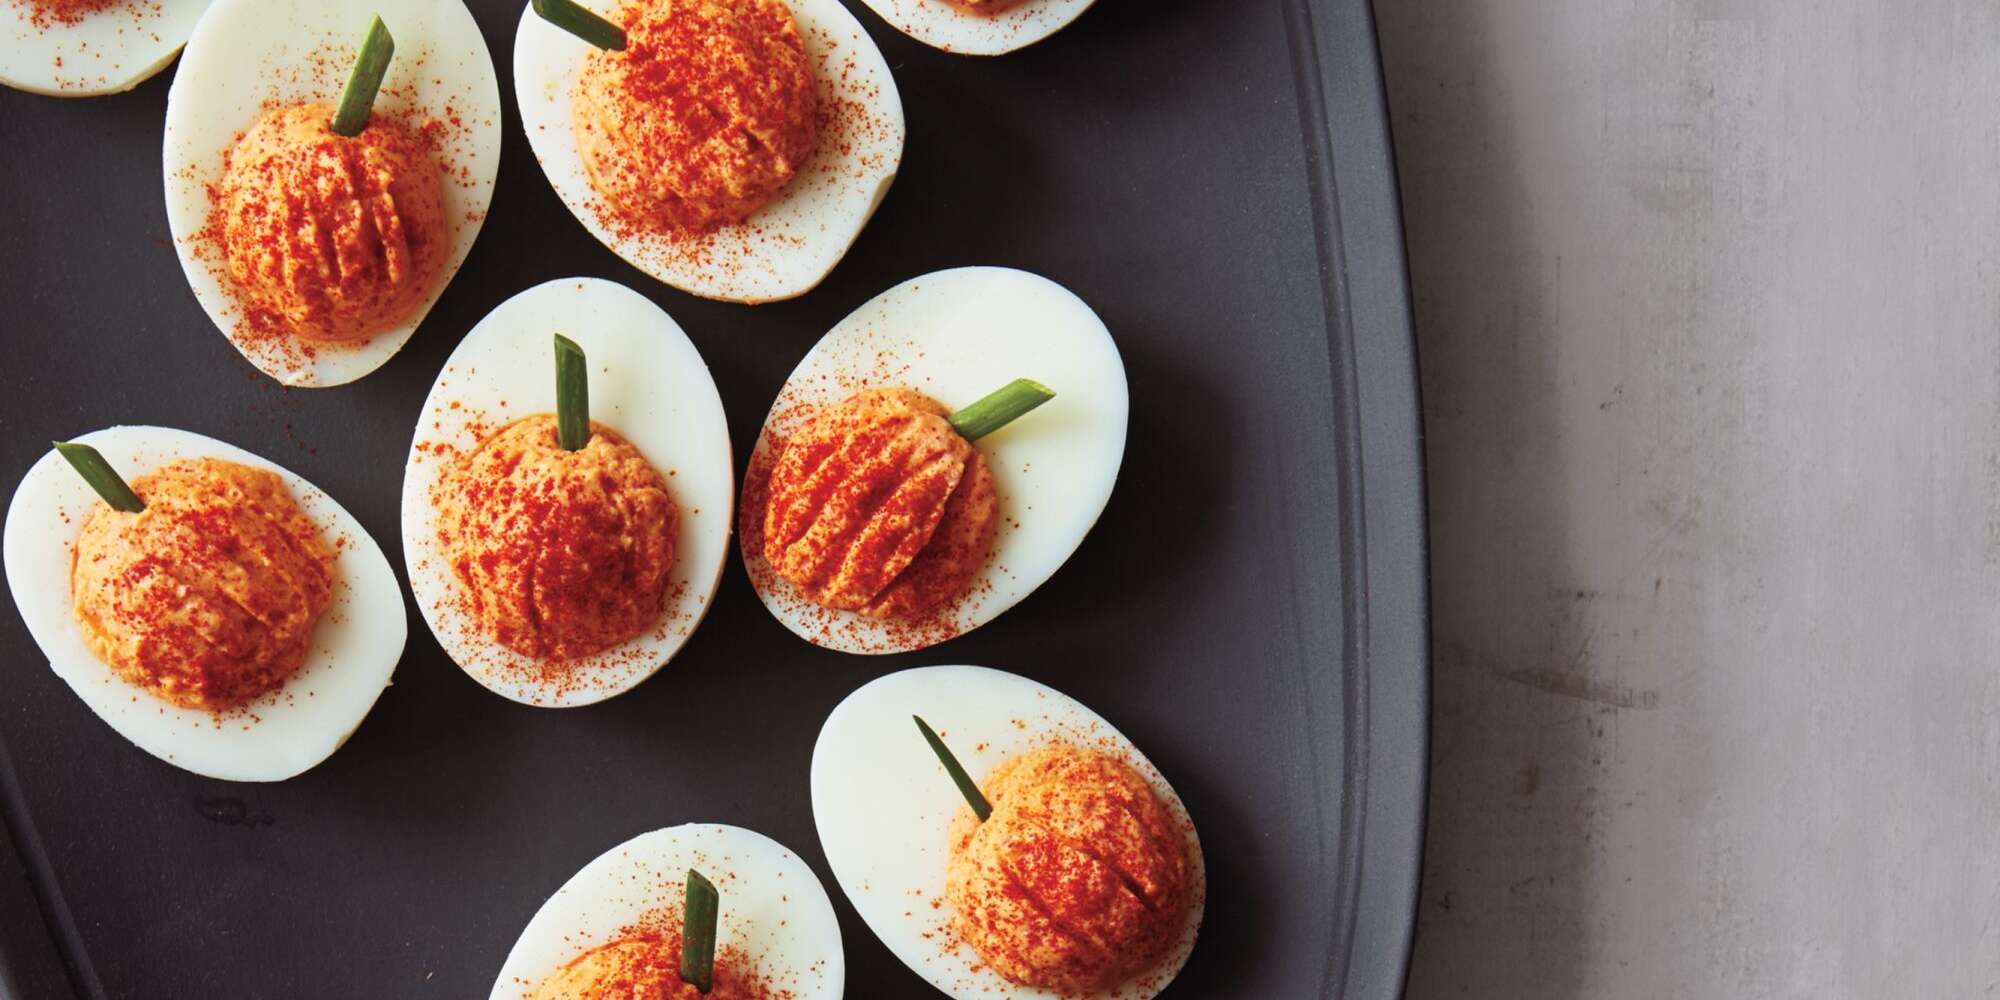 Best Pumpkin Deviled Eggs Recipe - How To Make Pumpkin Deviled Eggs